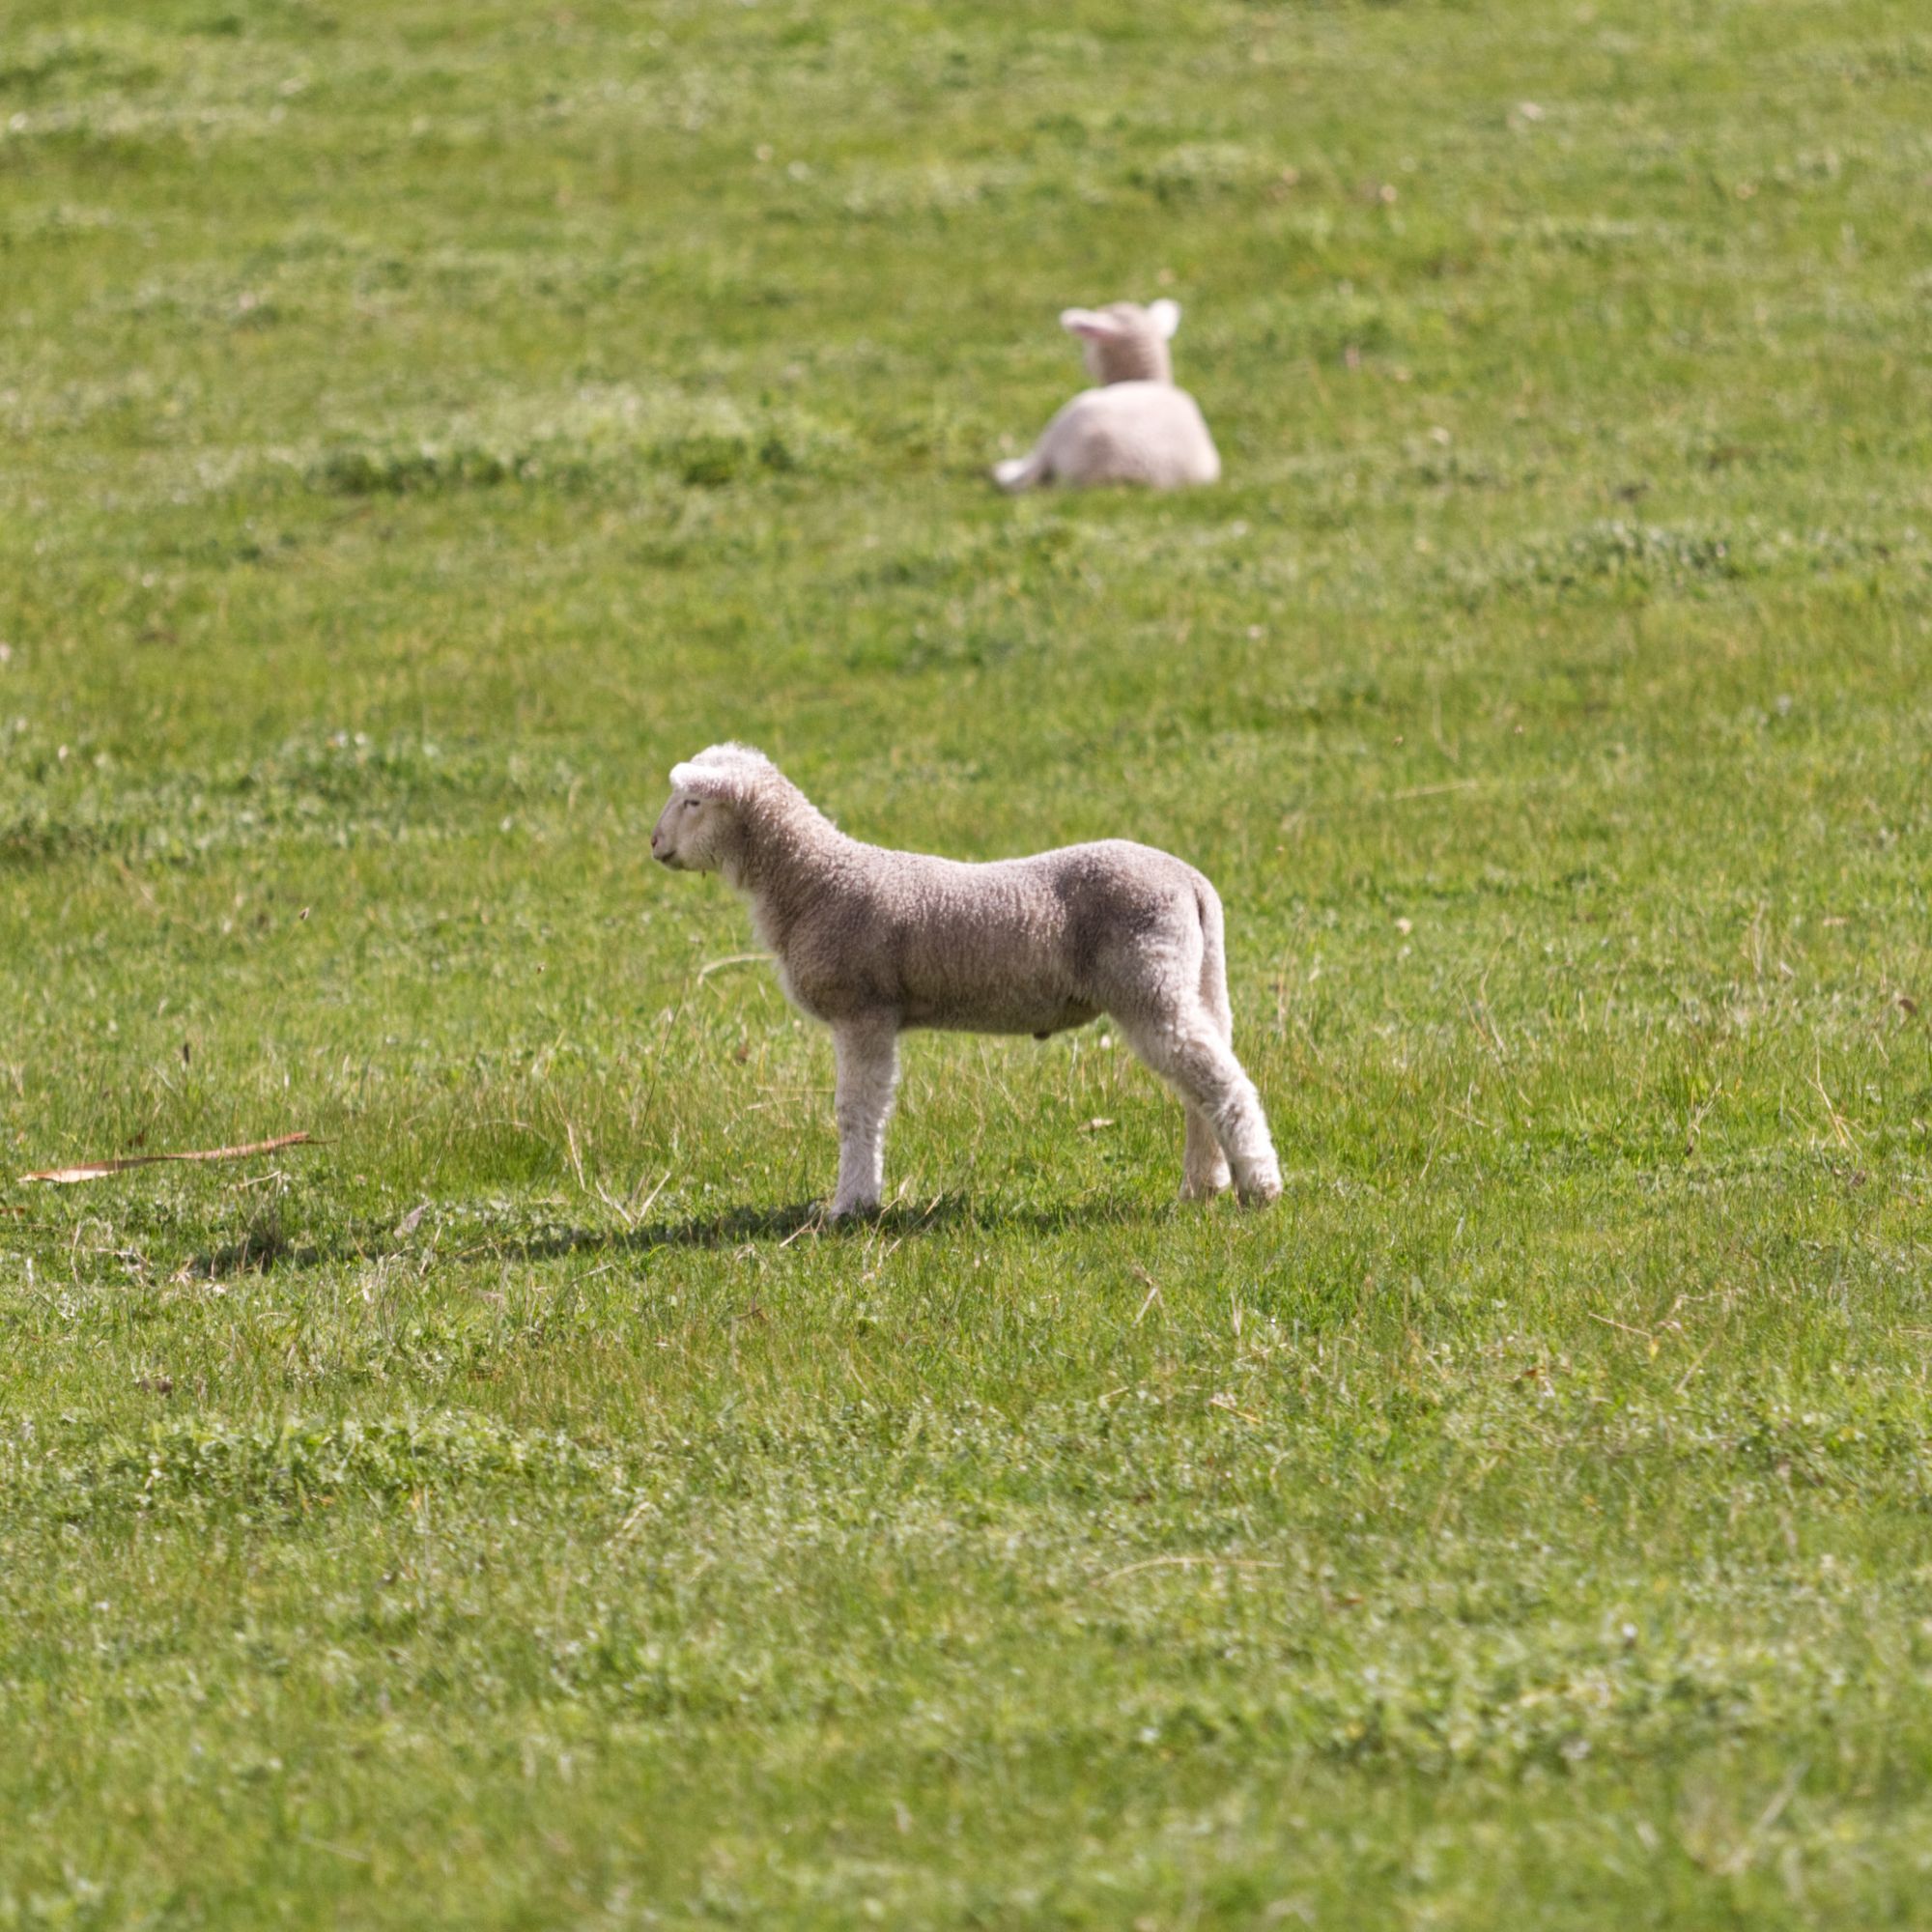 Lamb in a paddock